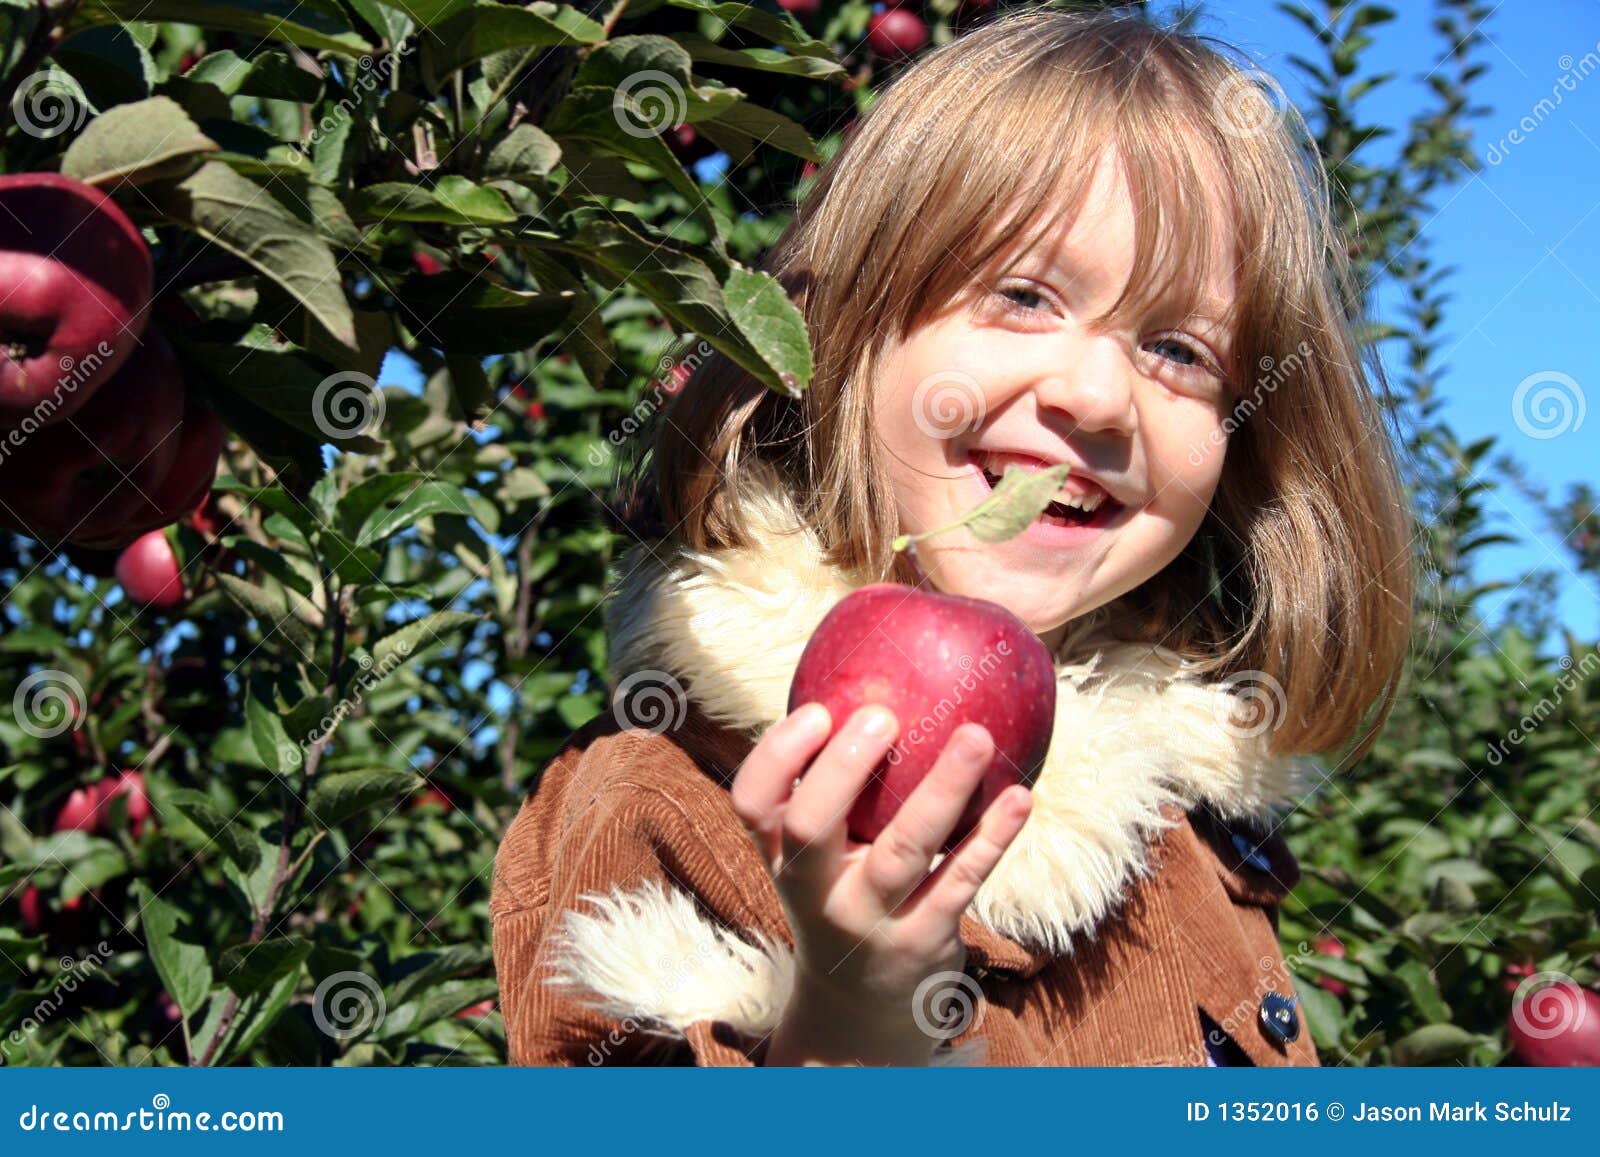 happy girl offers fresh apple